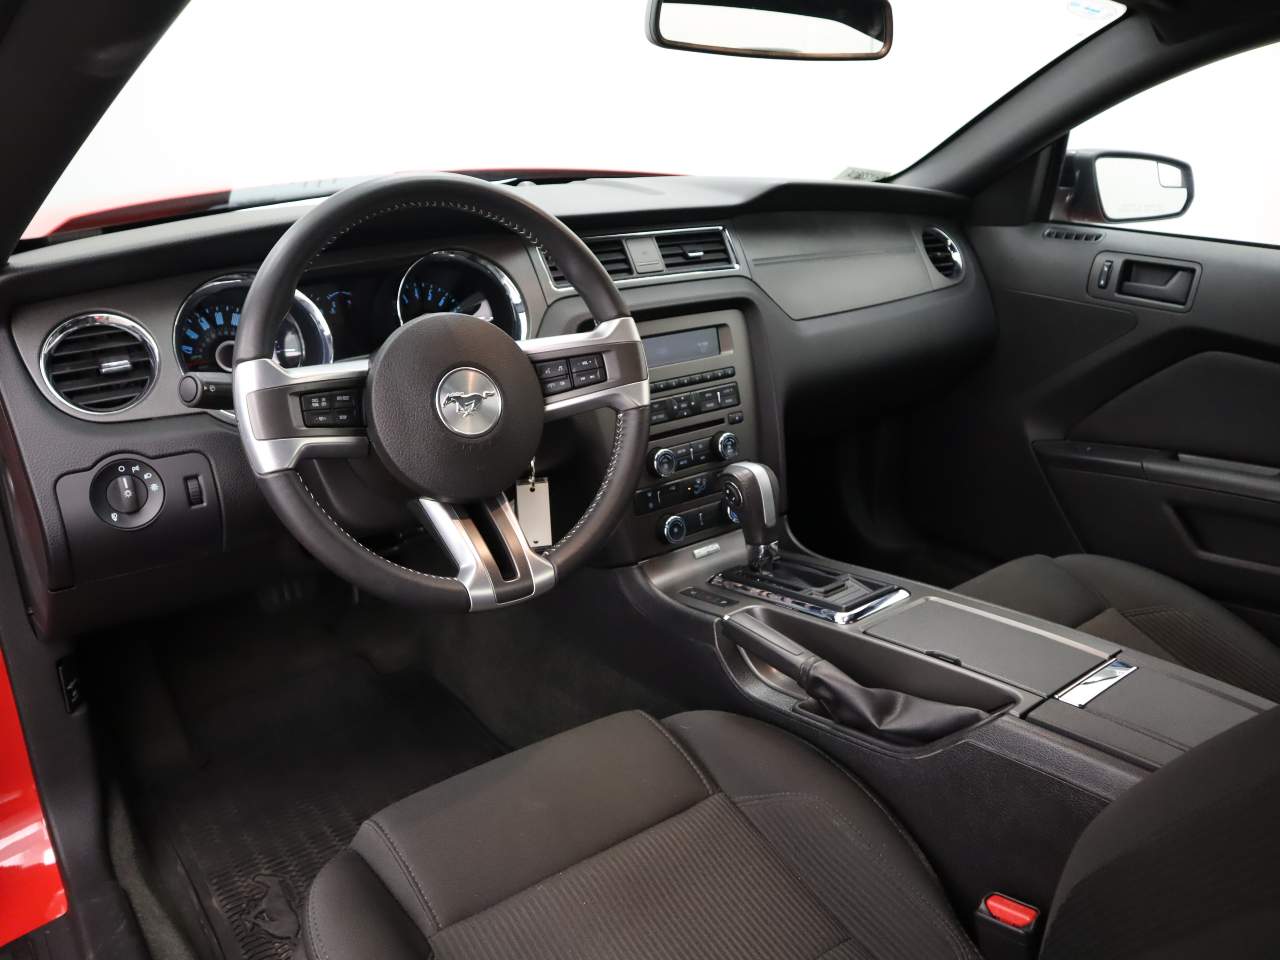 2014 Ford Mustang V6